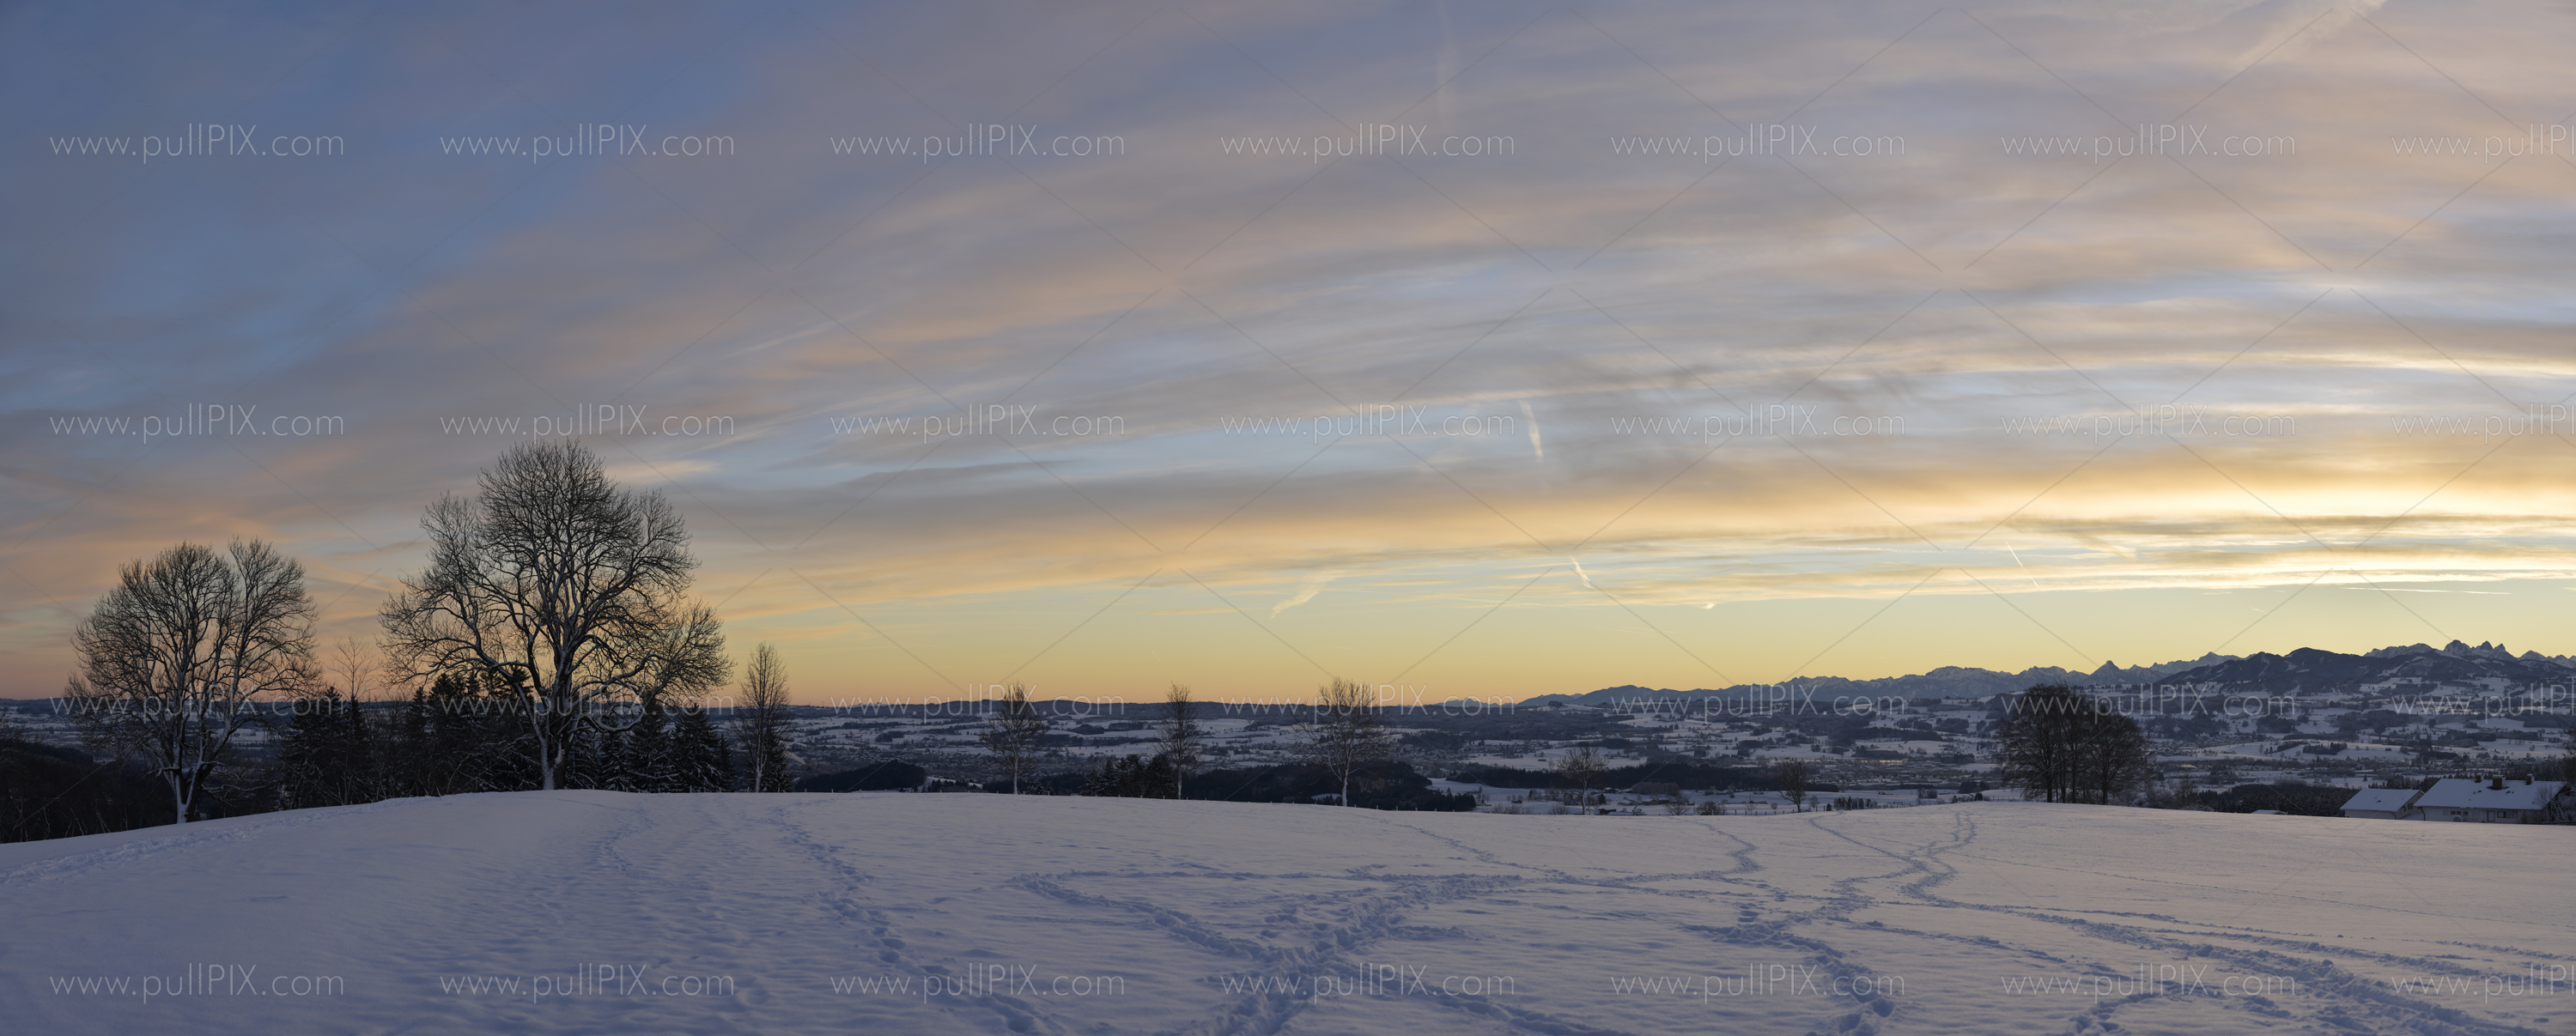 Preview sonnenaufgang im schnee 1.jpg